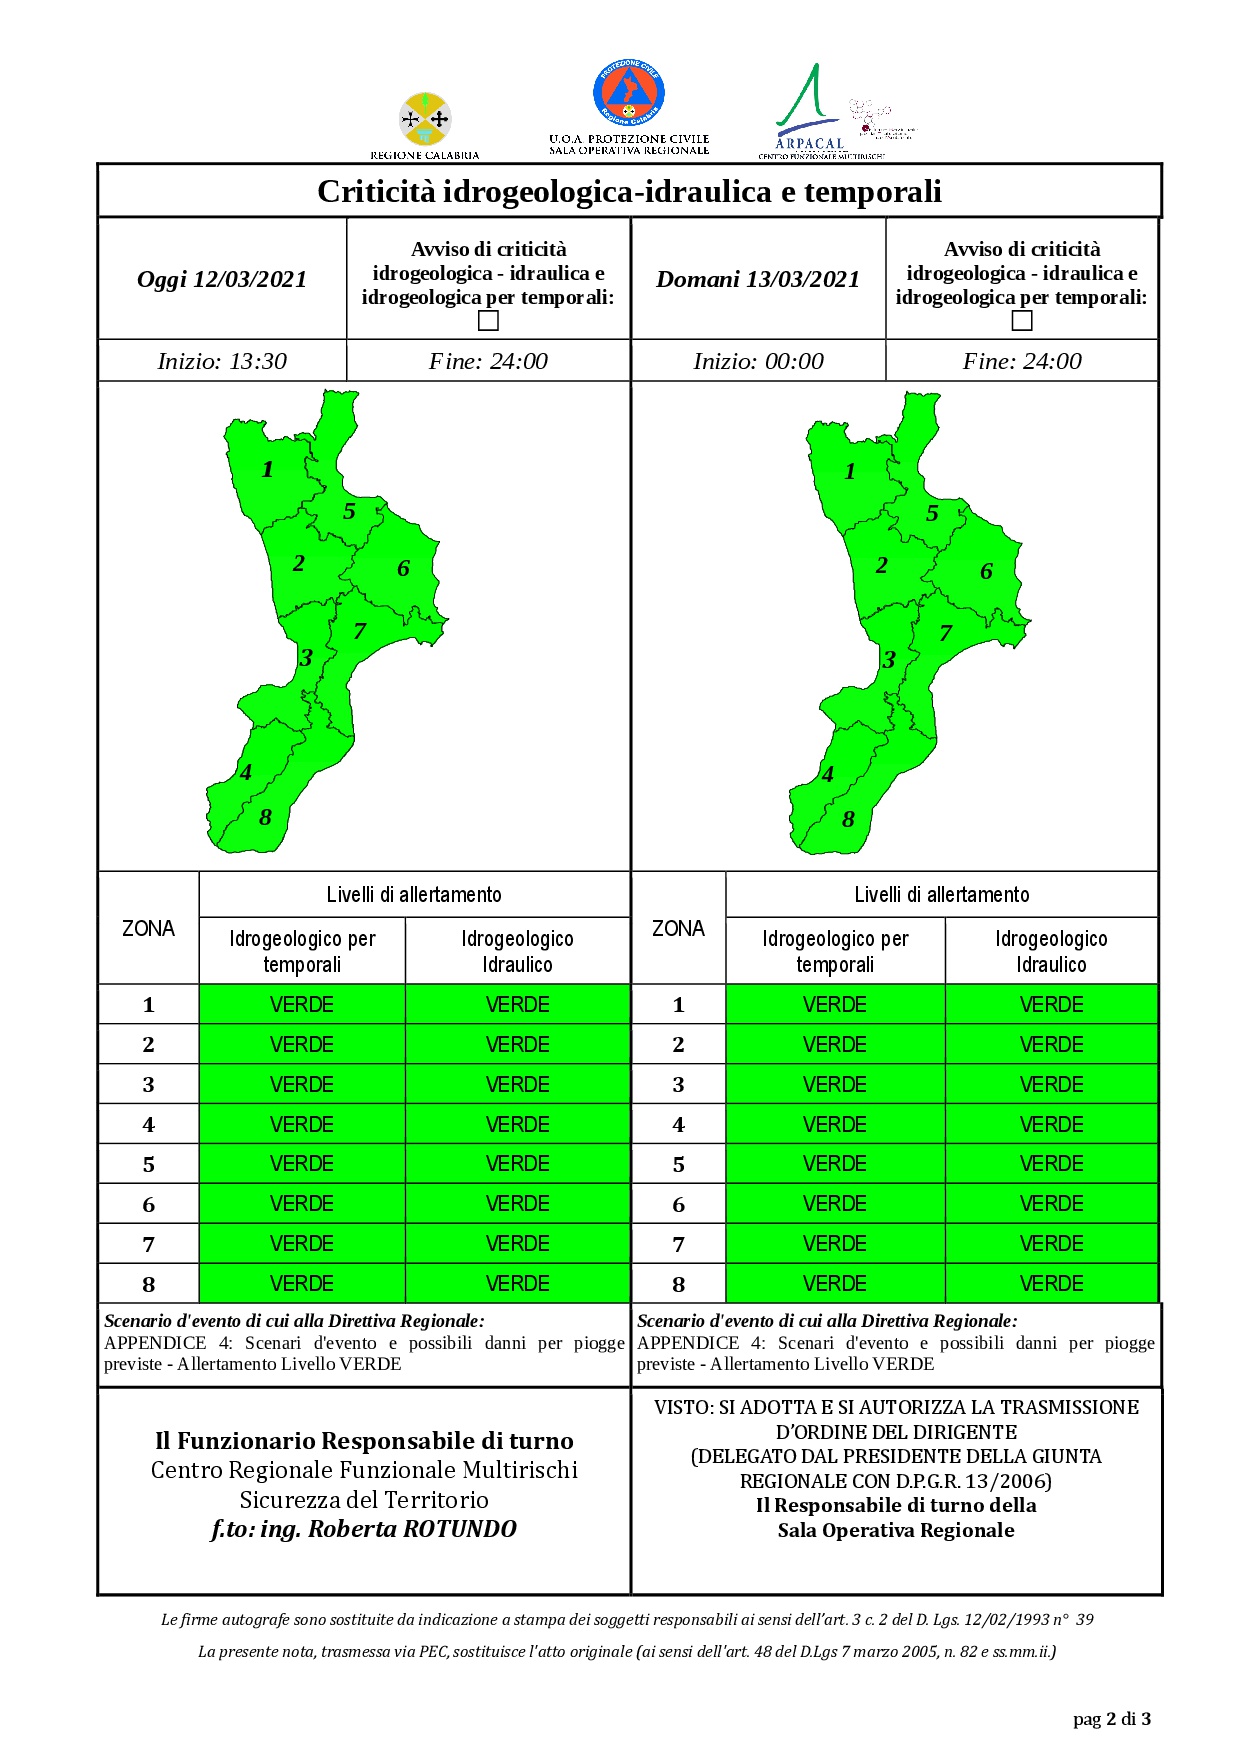 Criticità idrogeologica-idraulica e temporali in Calabria 12-03-2021